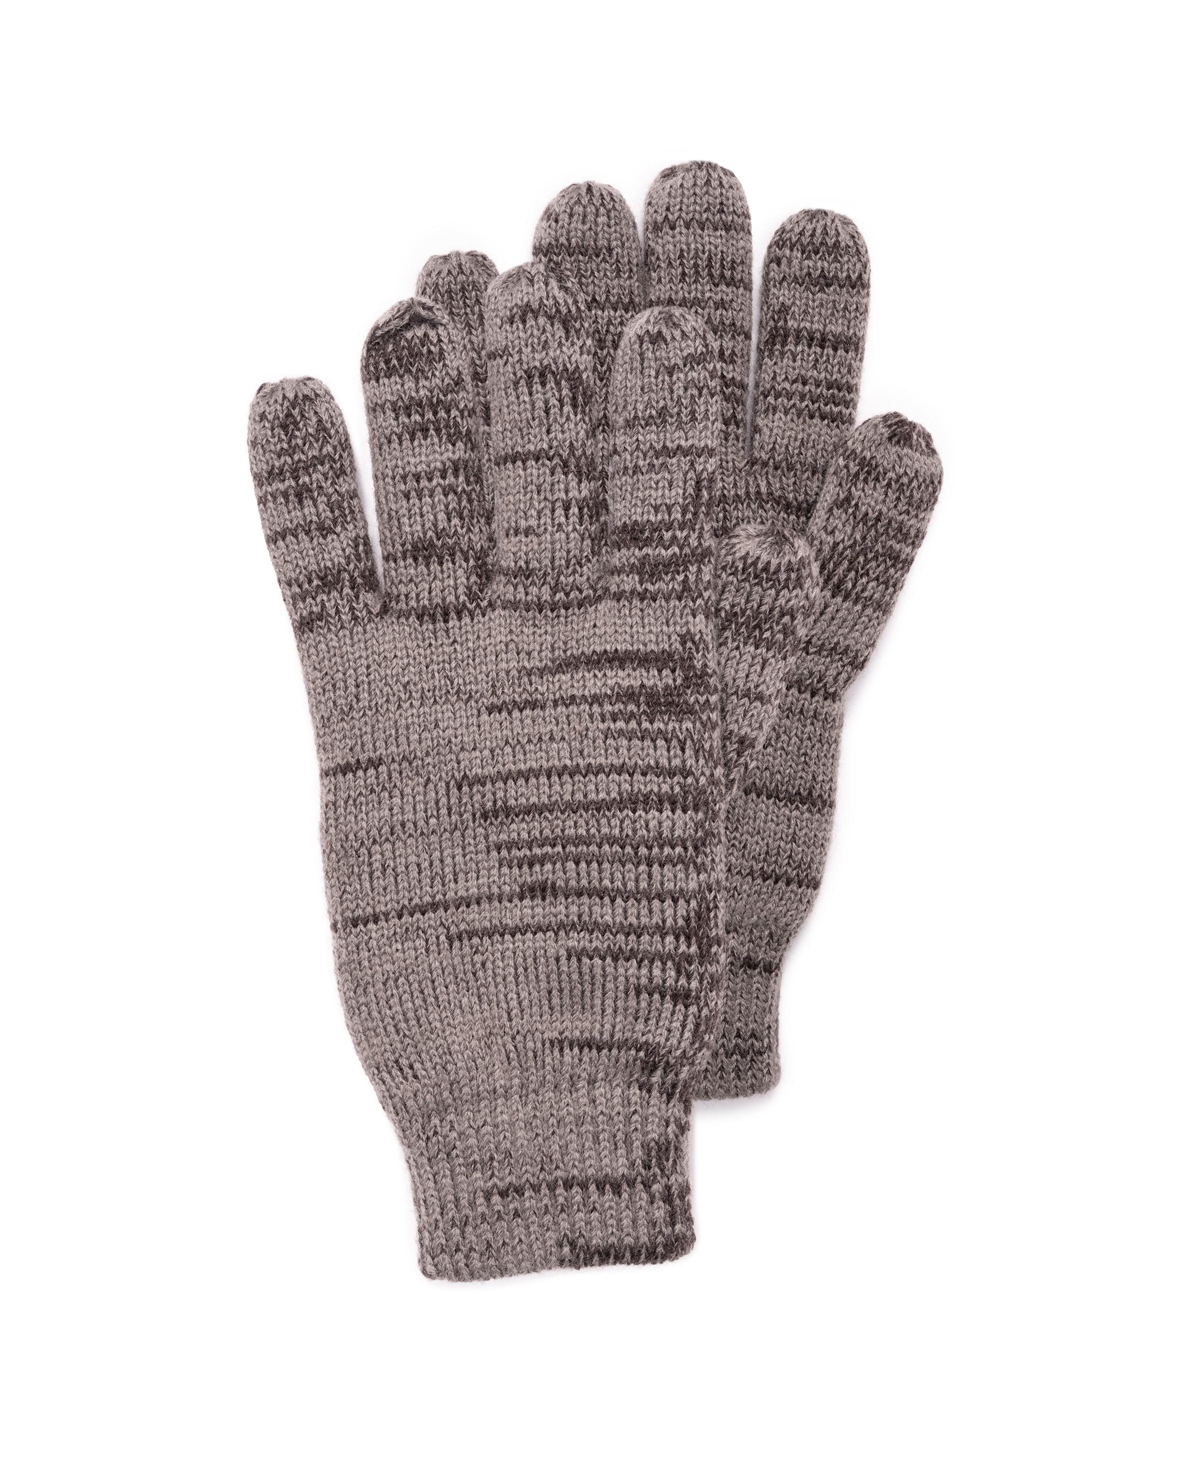 Men's Marl Gloves, Pewter/Ebony Marl, One Size - Pewter/ebony marl